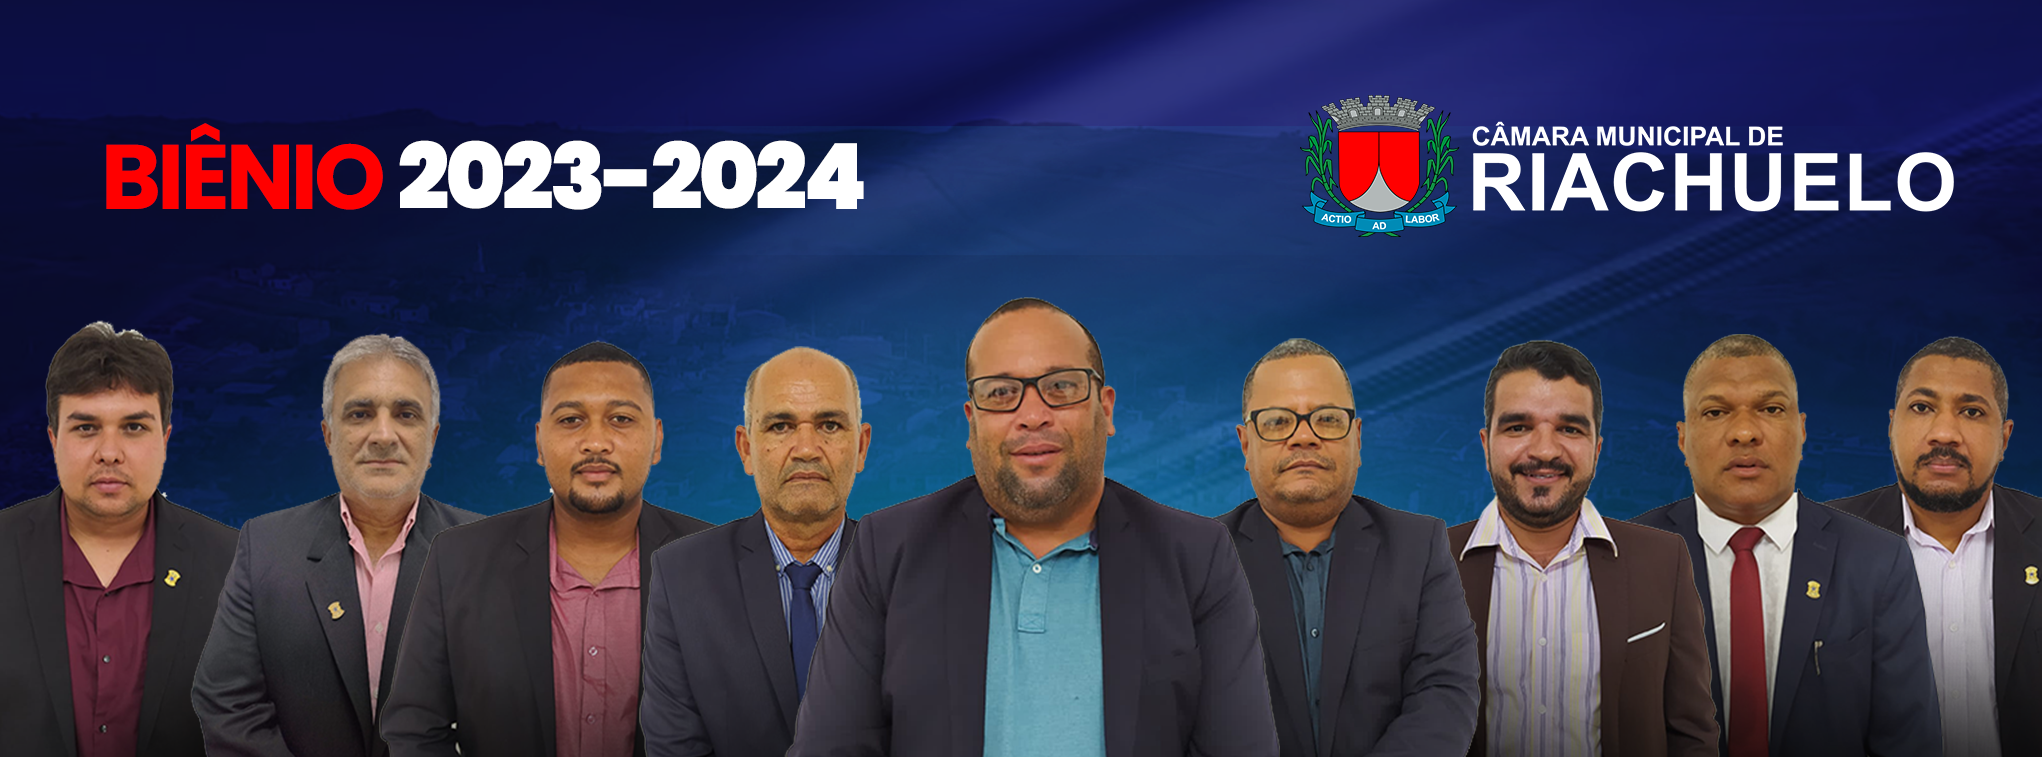 BIENIO 2023 - 2024